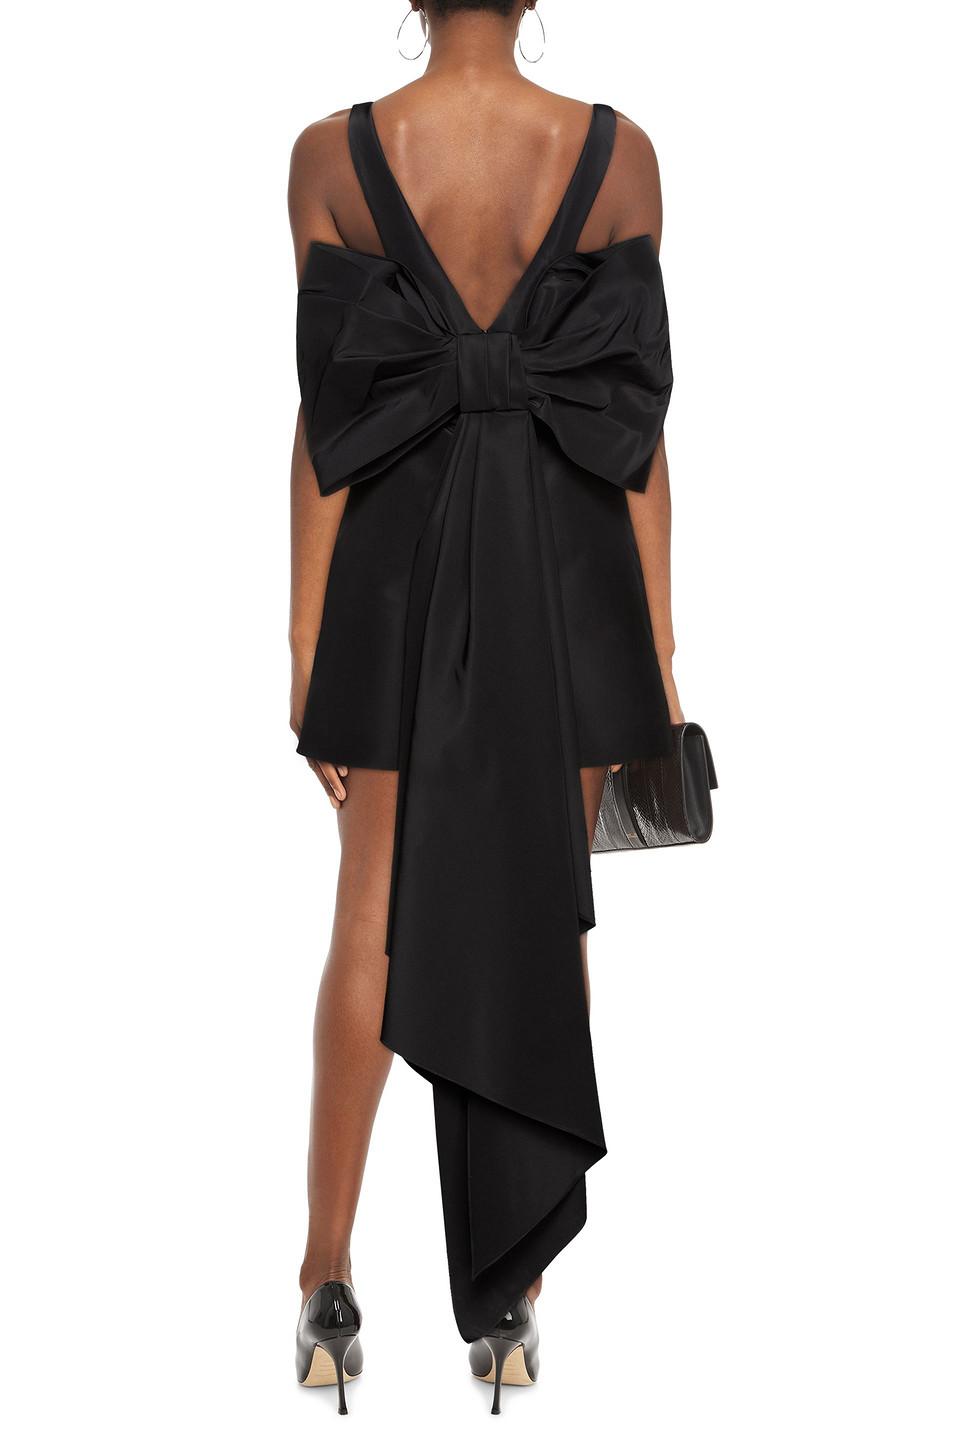 Carolina Herrera Bow-embellished Silk-faille Mini Dress in Black | Lyst